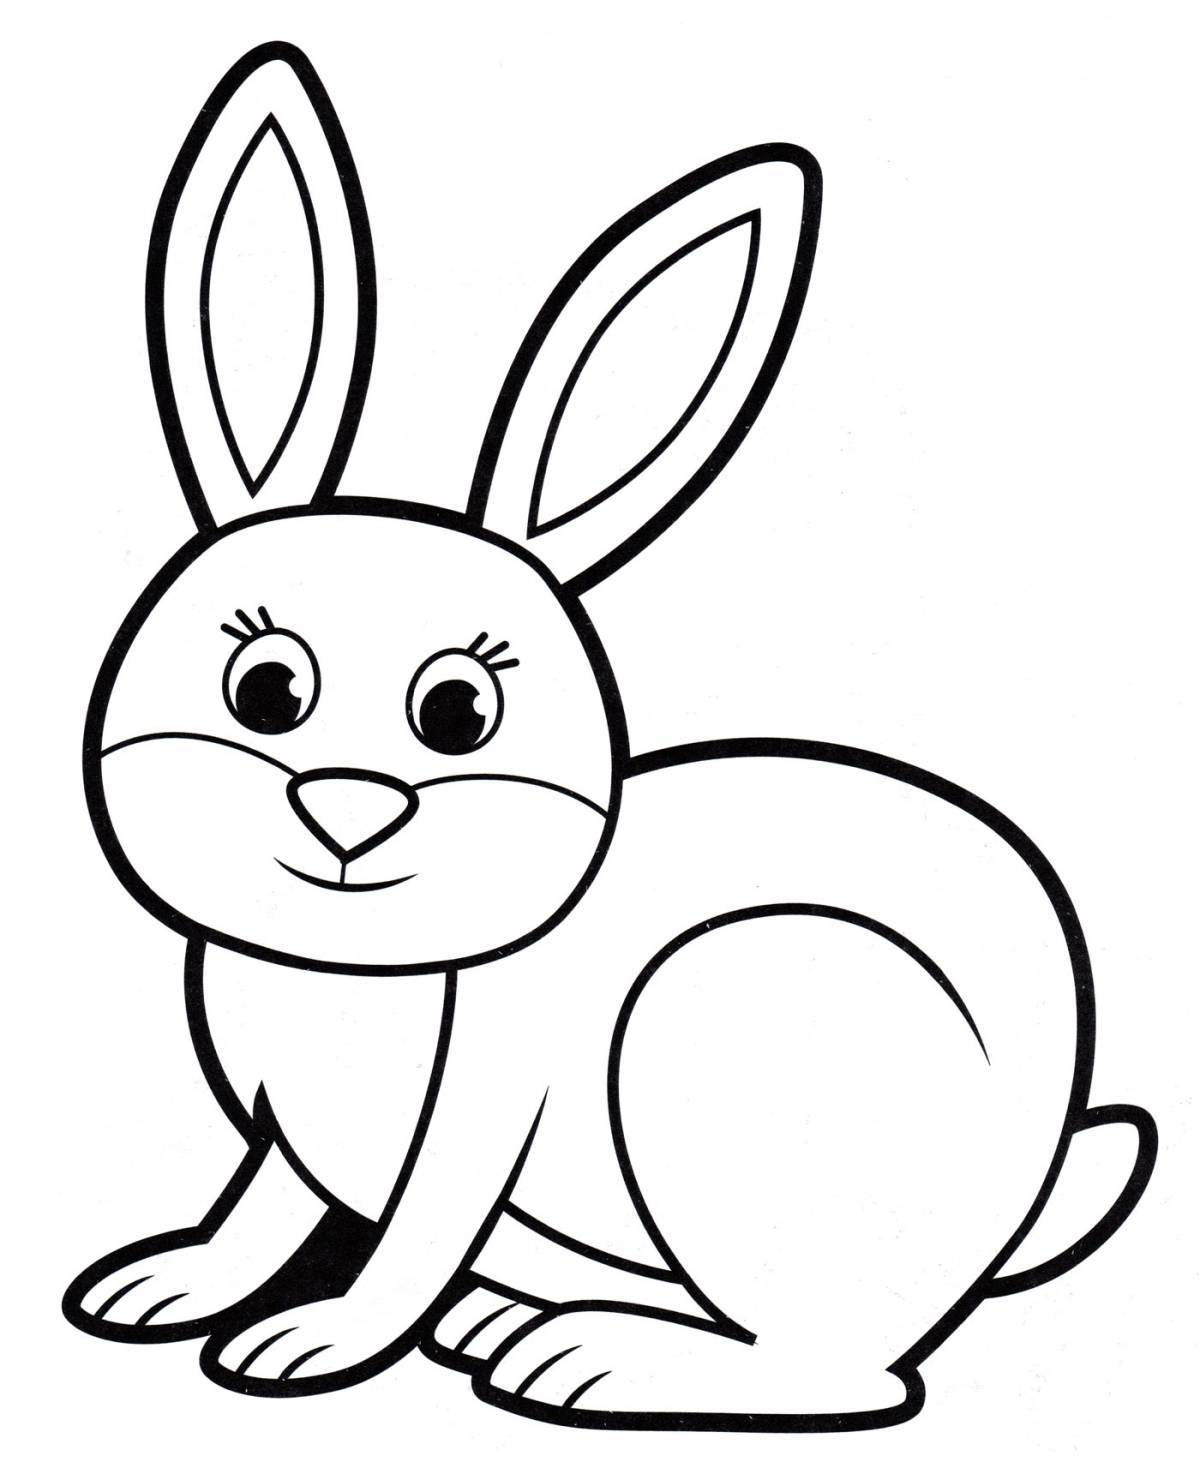 Bunny for kids #3